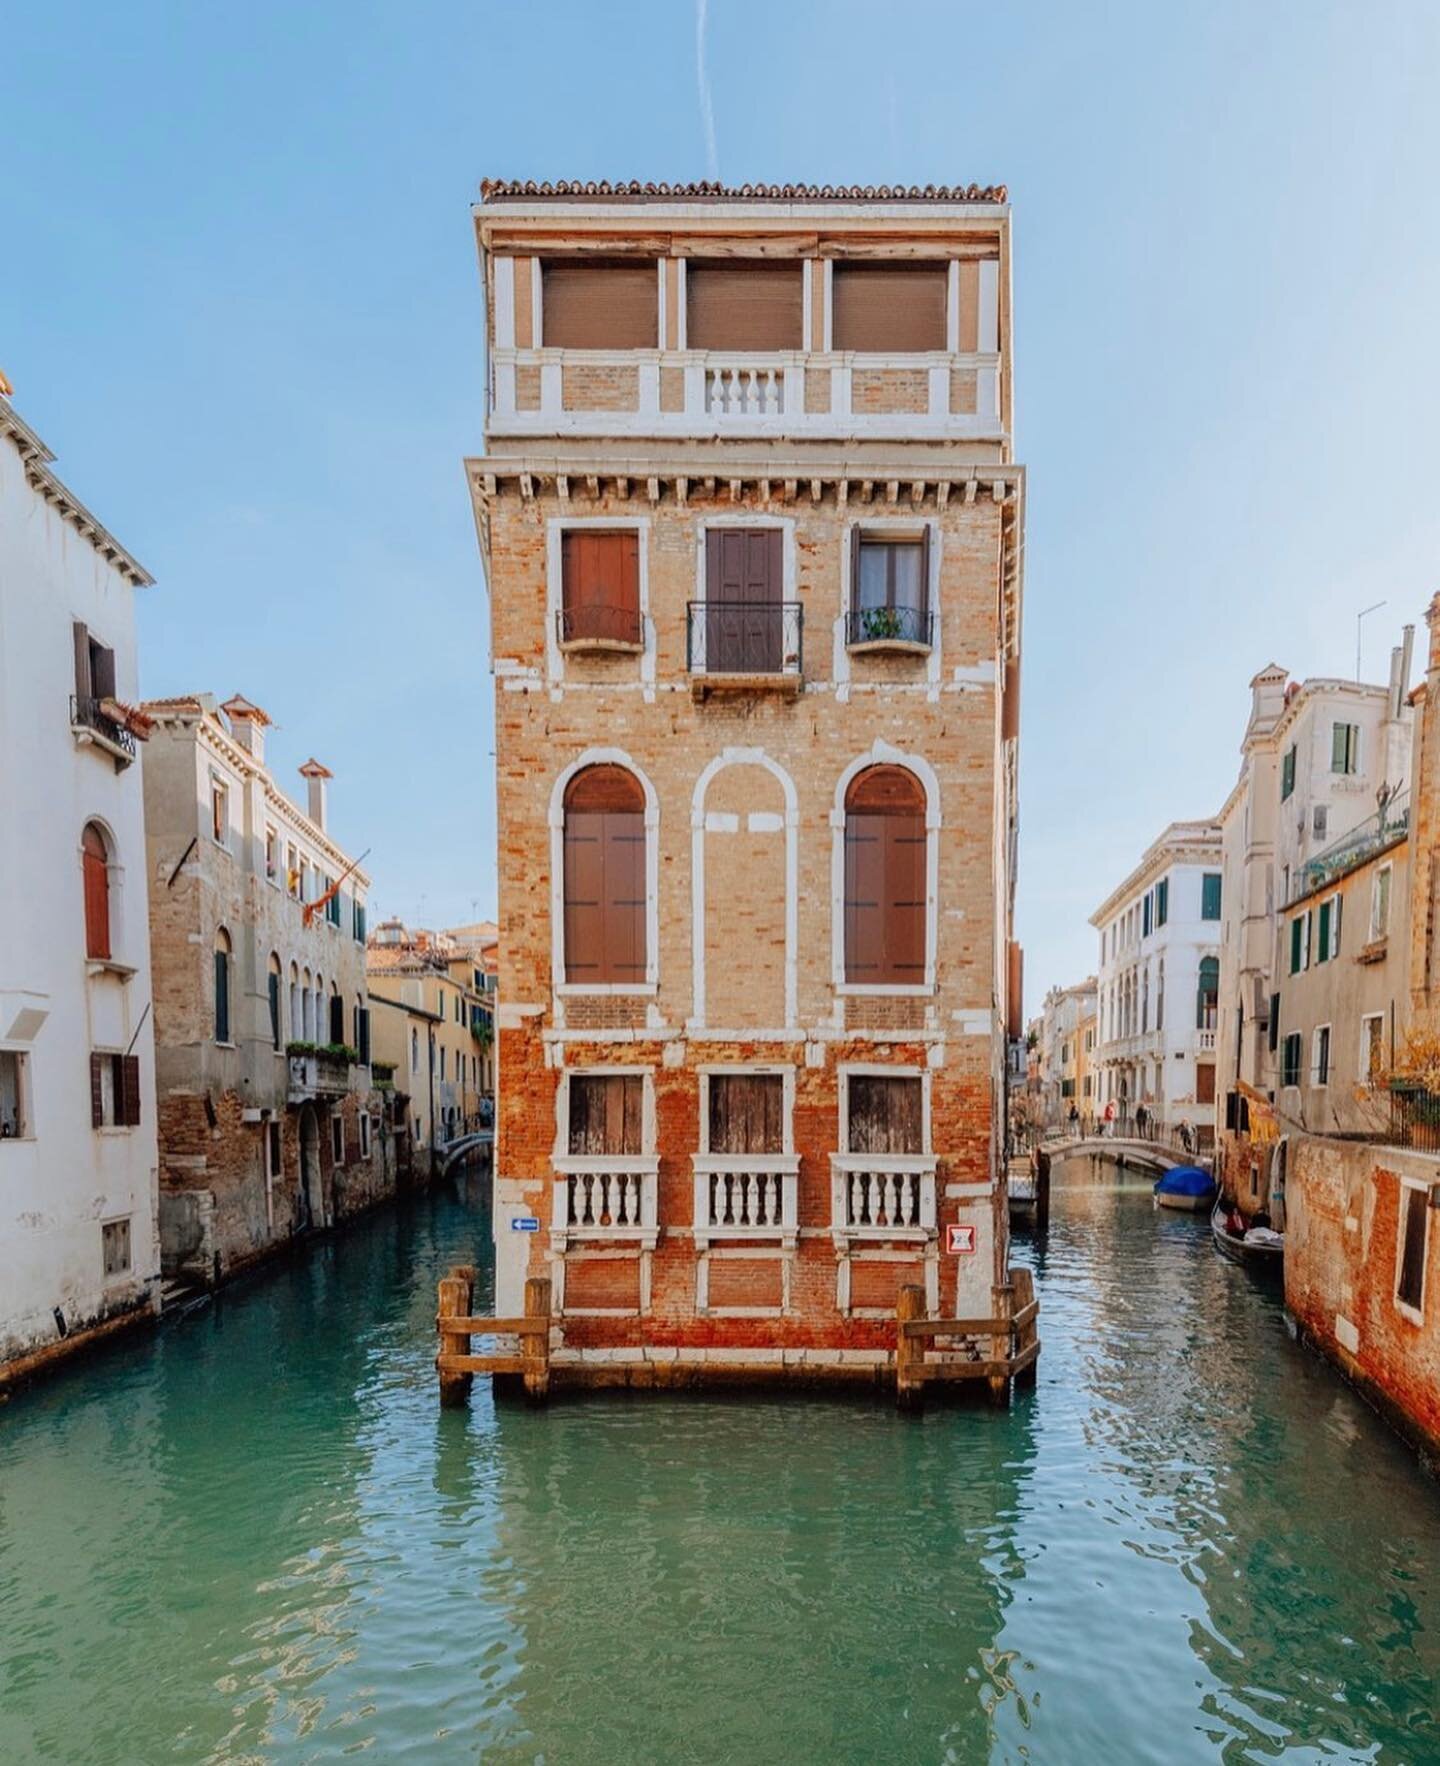 Venice, Italy // Print's top finds for a weekend stay in Venice:⁠
⁠
🏨 @ilpalazzoexperimental⁠
🍝 #vinidaarturo⁠
🛍️ @piedaterrevenezia⁠
🍝 @ristorantedaivo.venezia⁠
⁠
__⁠
📂: #printfreshfinds #printcollectivevenice⁠
__⁠
📸: @miguel.sagredo @ilpalazz